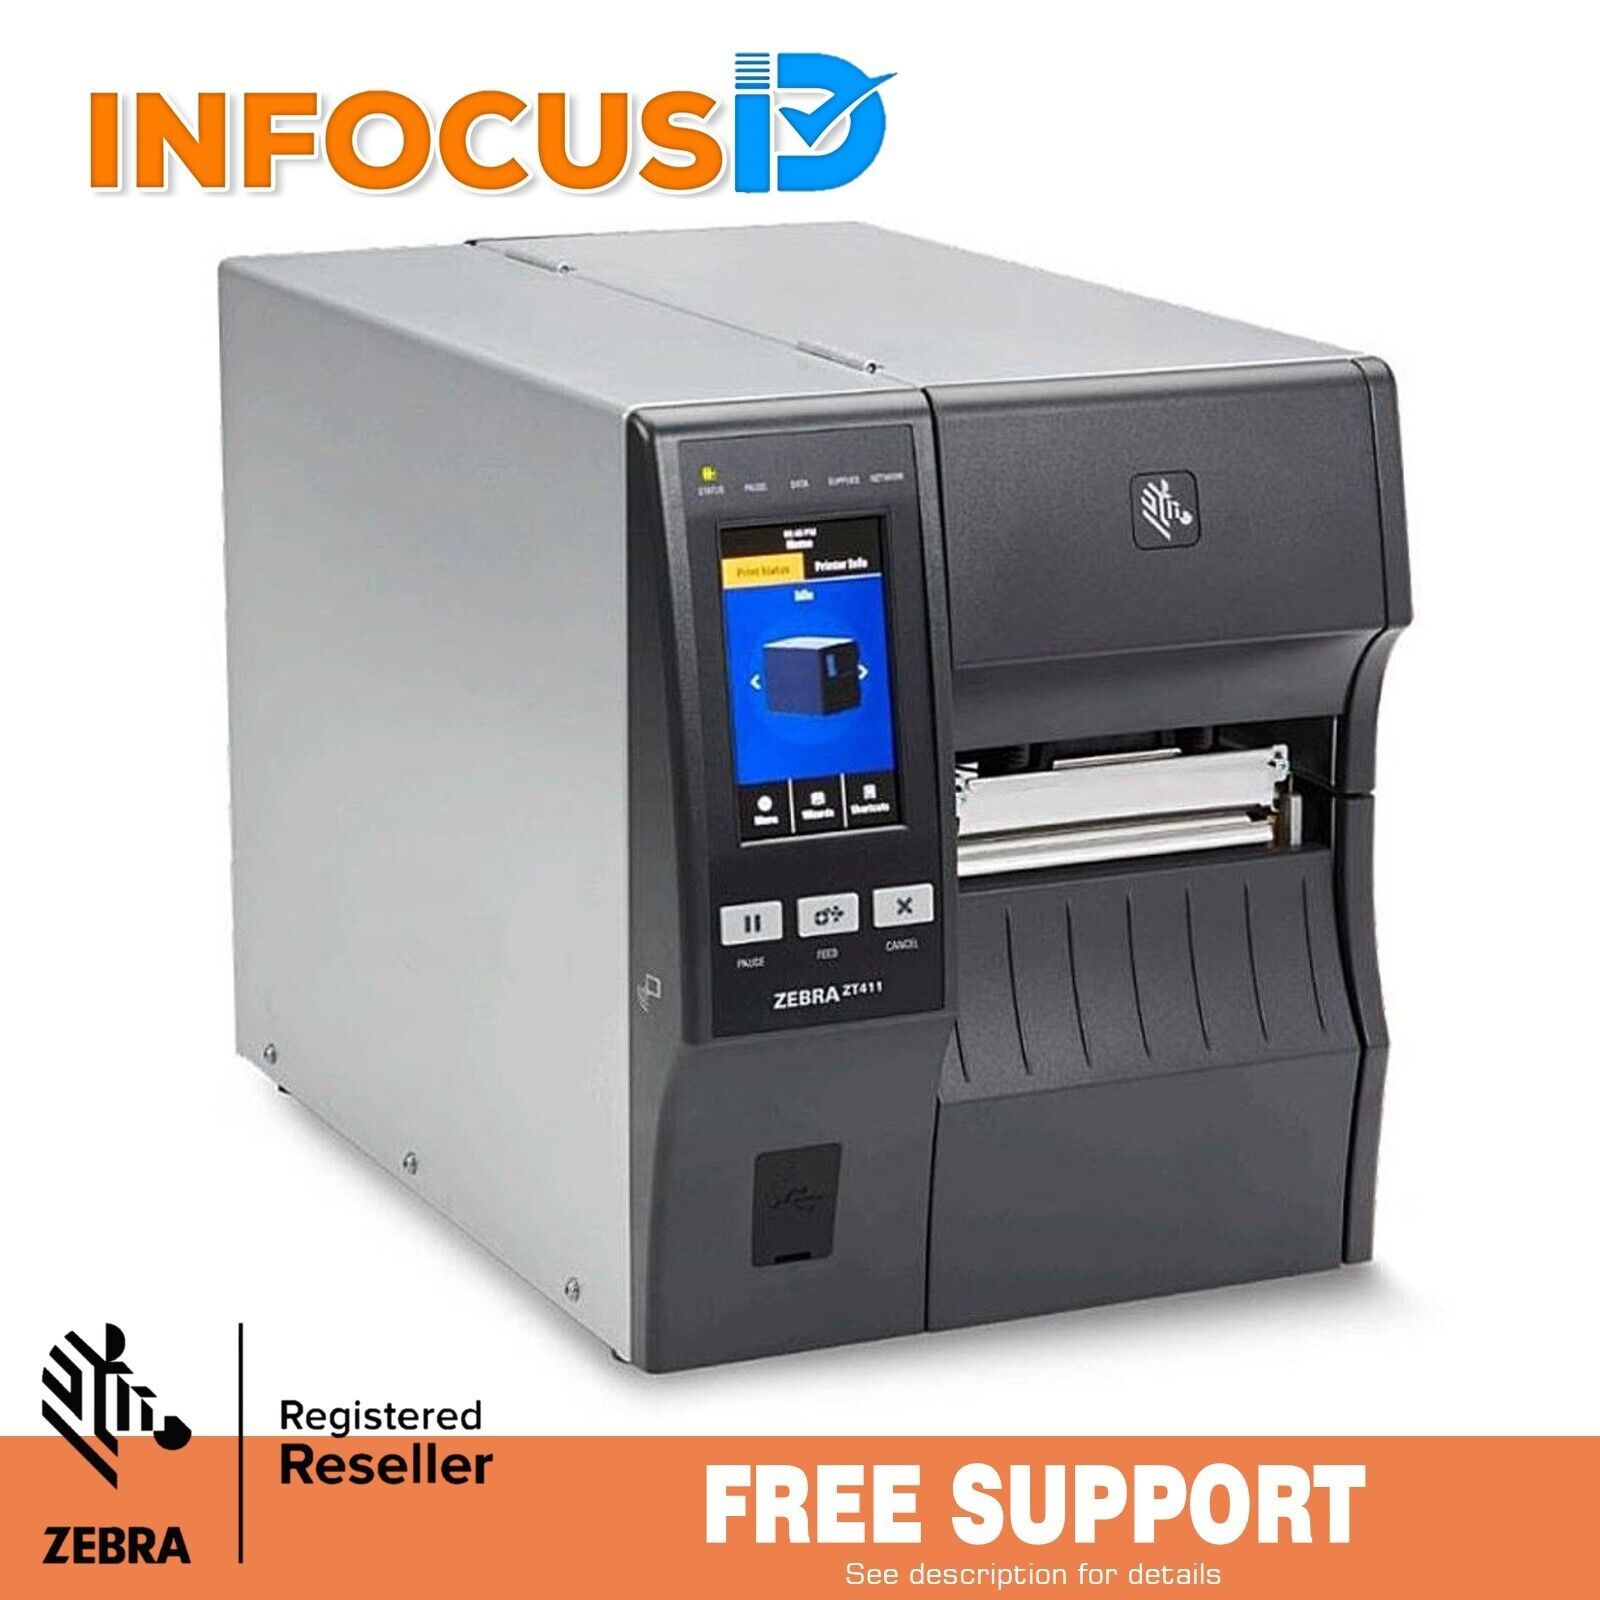 Zebra ZT411 300dpi Industrial Barcode Label Printer Inc. VAT & SUPPORT